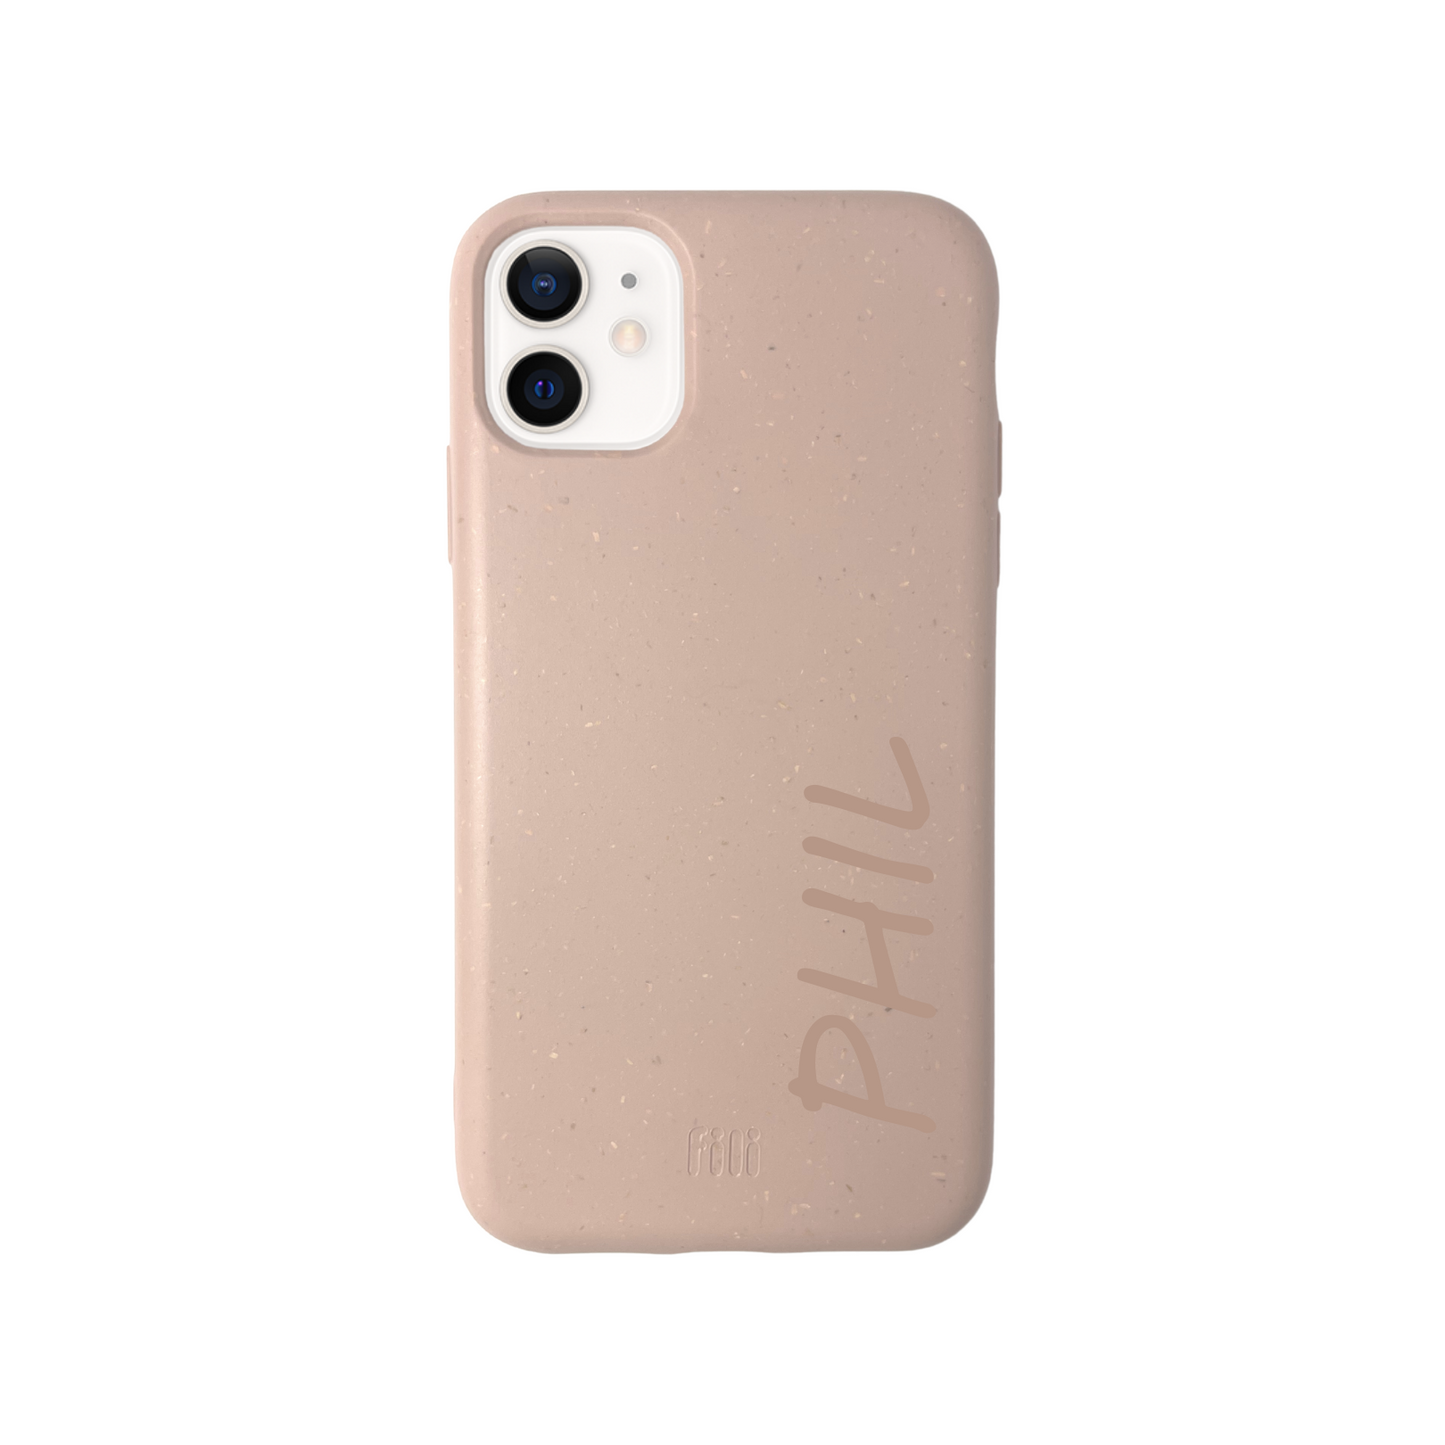 FILI Custom Biodegradable Smooth iPhone 11 Case